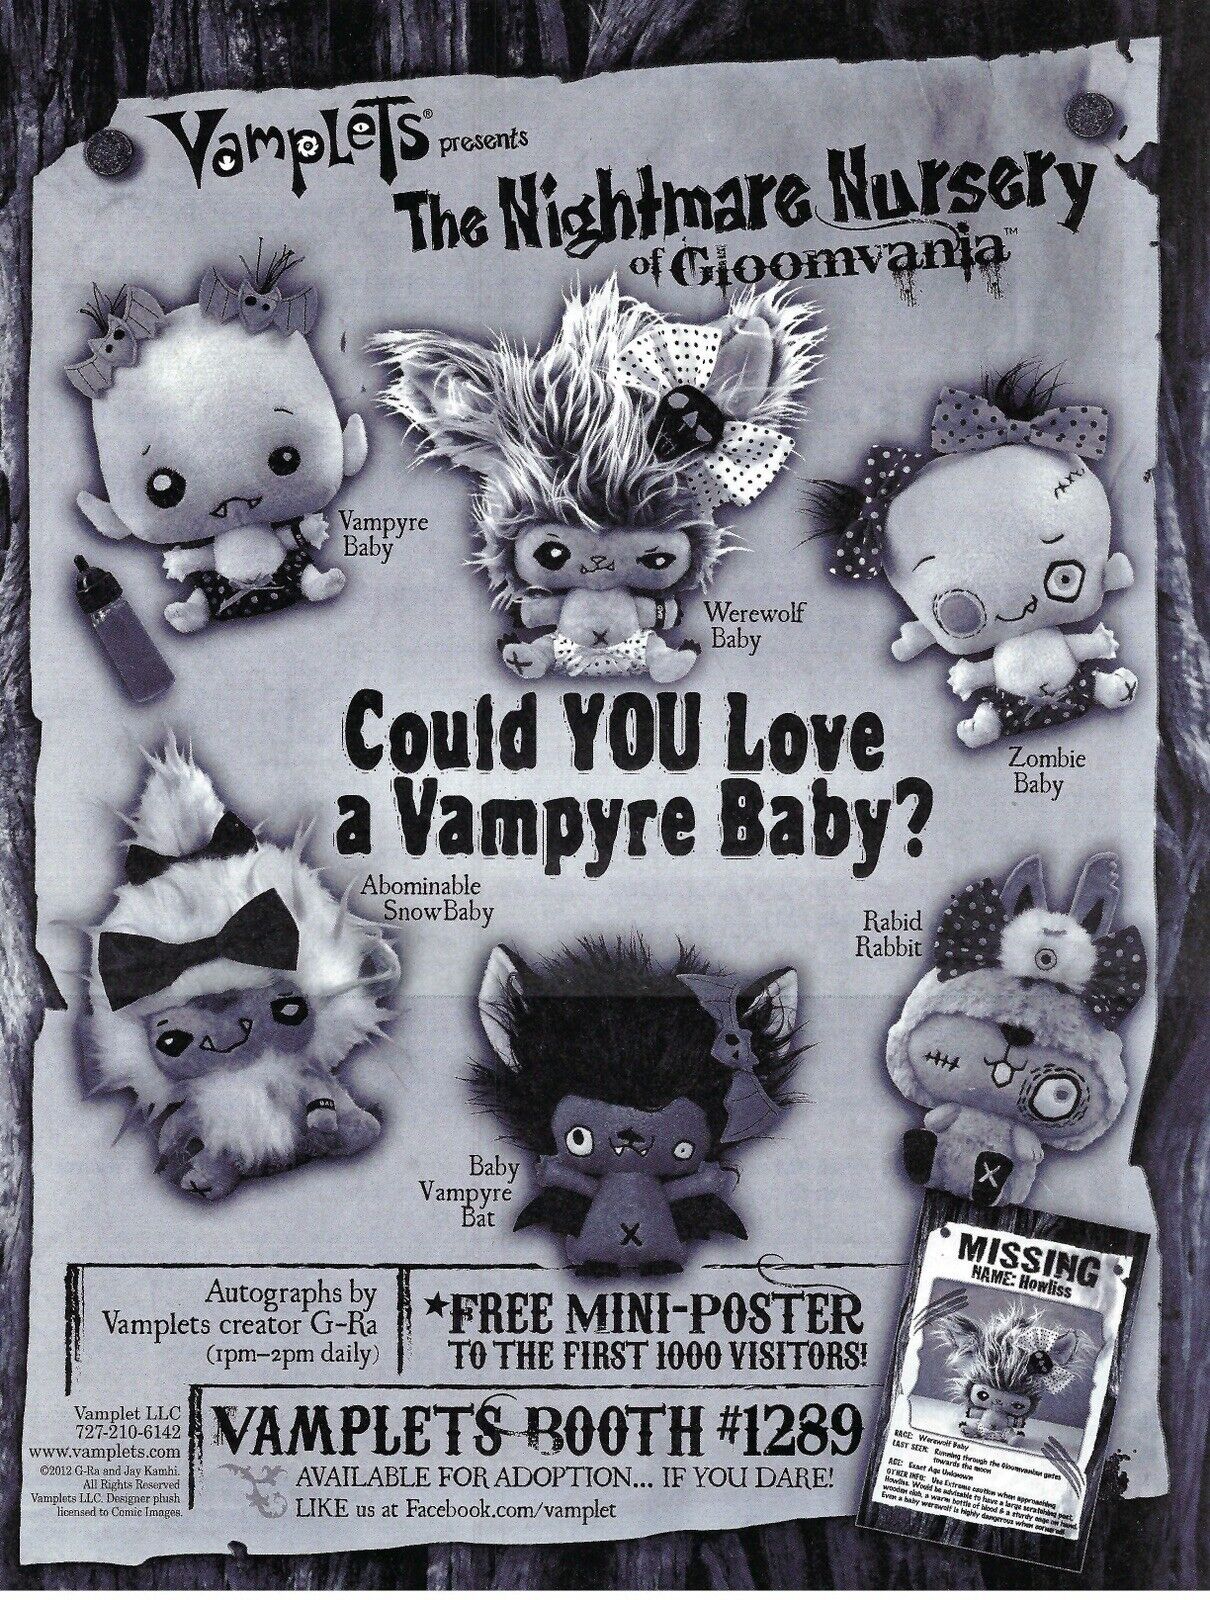 2012 Vamplets The Nightmare Nursery of Gloomvania Vampyre Plush Print Ad/Poster